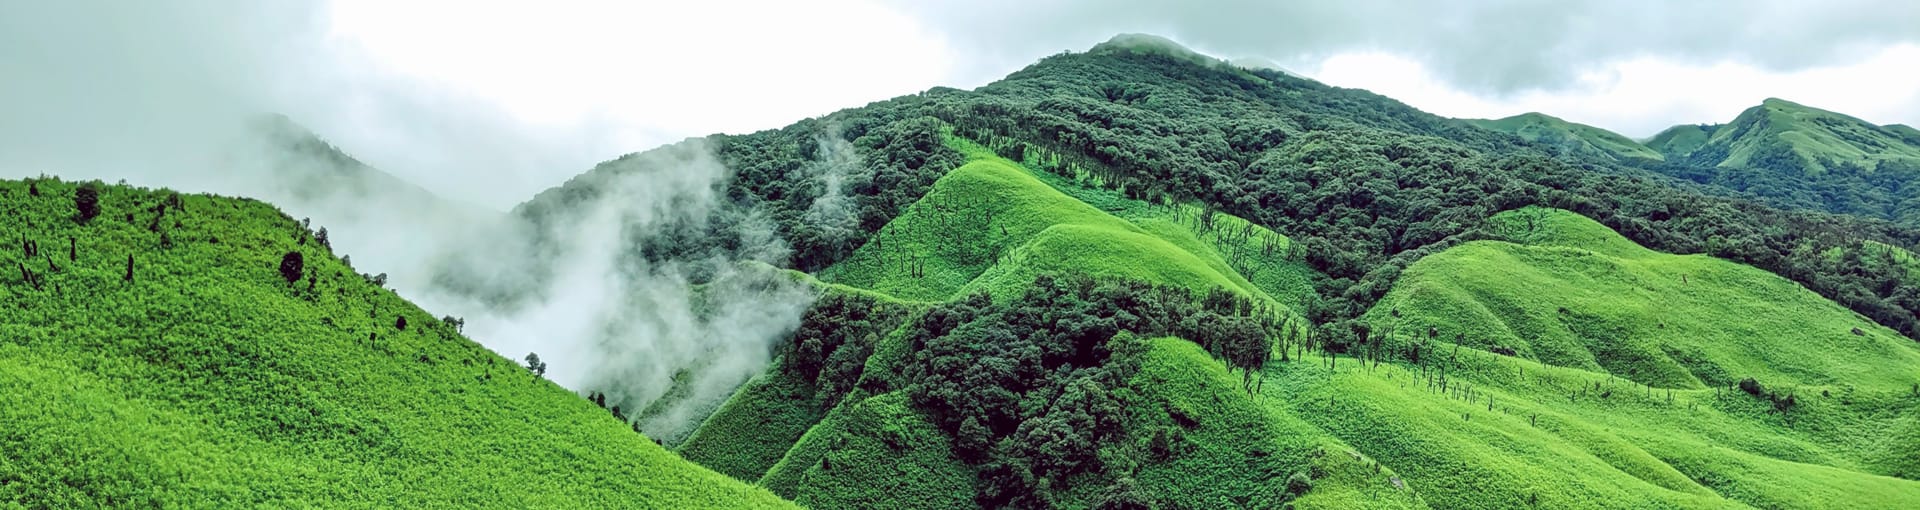 green-mountains-of-dzuku-valley-nagaland-india-these-valleys